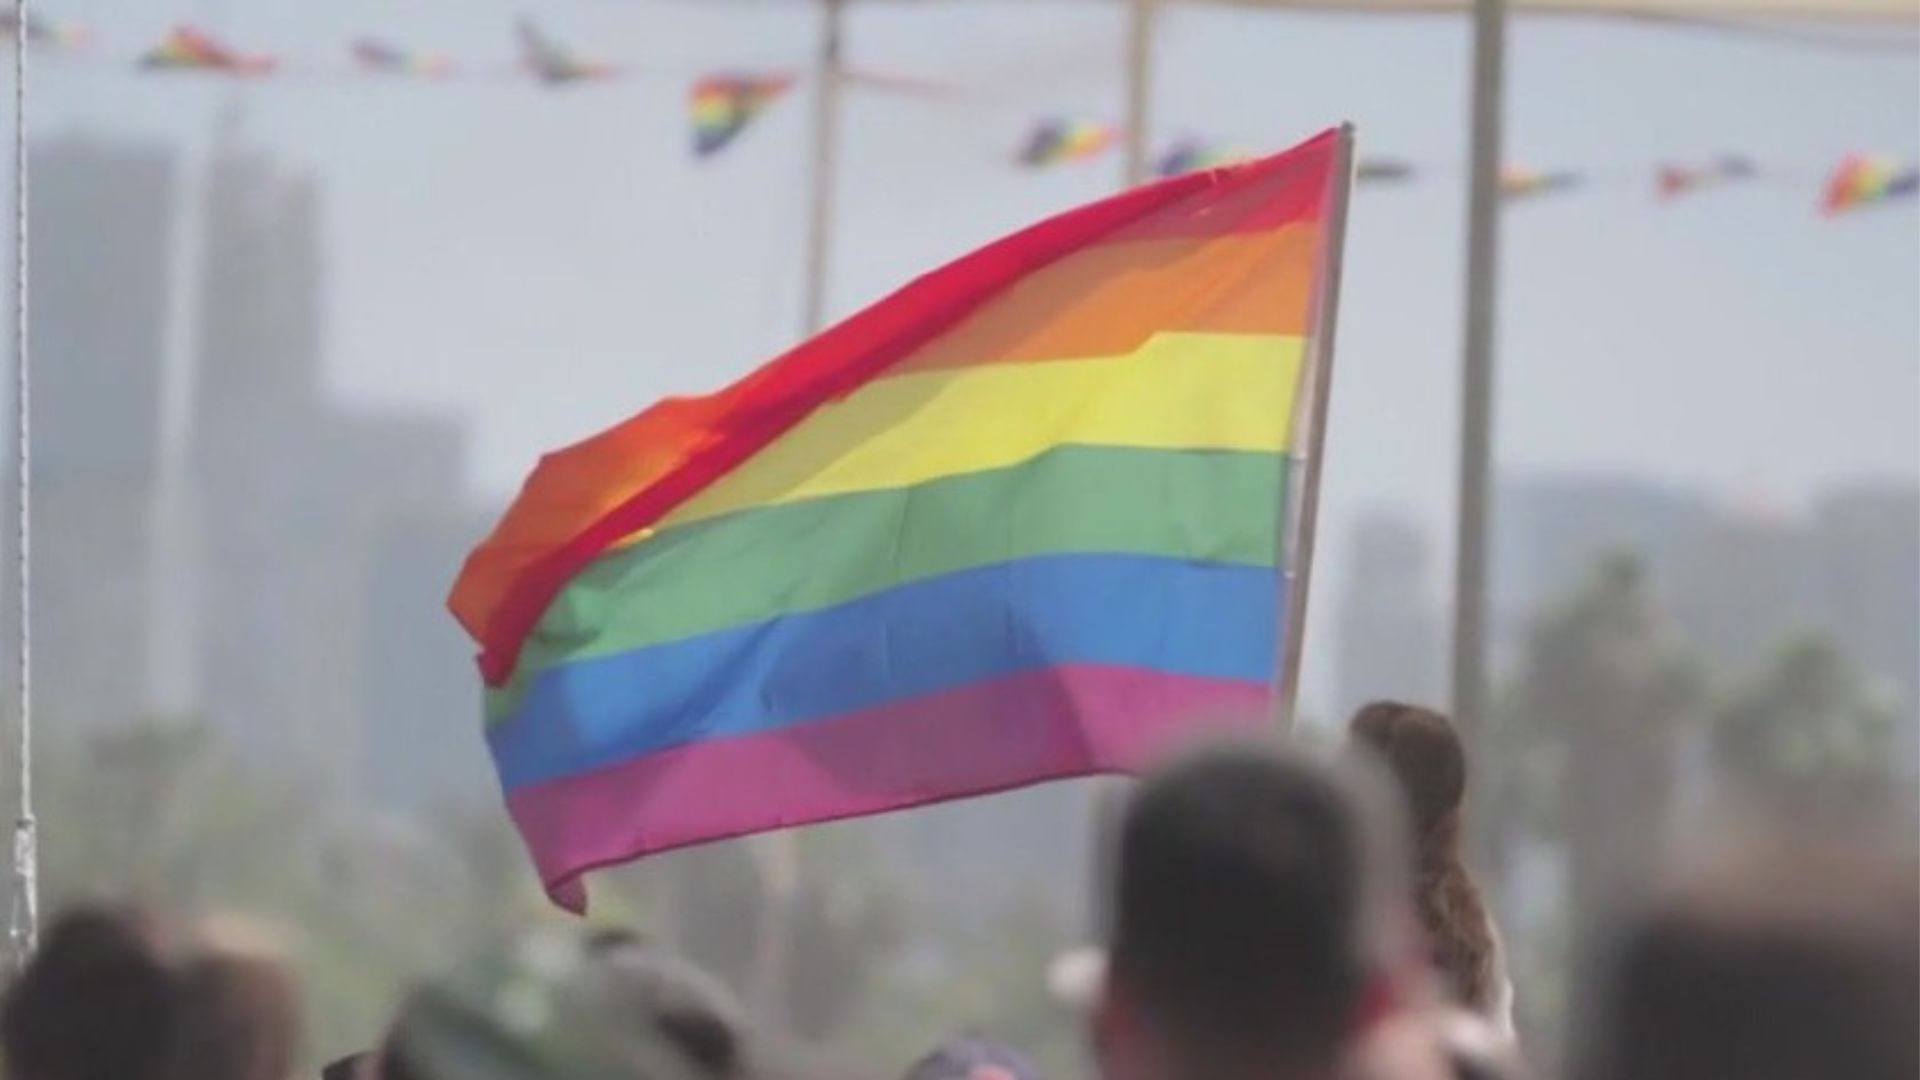 OC not flying LGBTQ pride flags